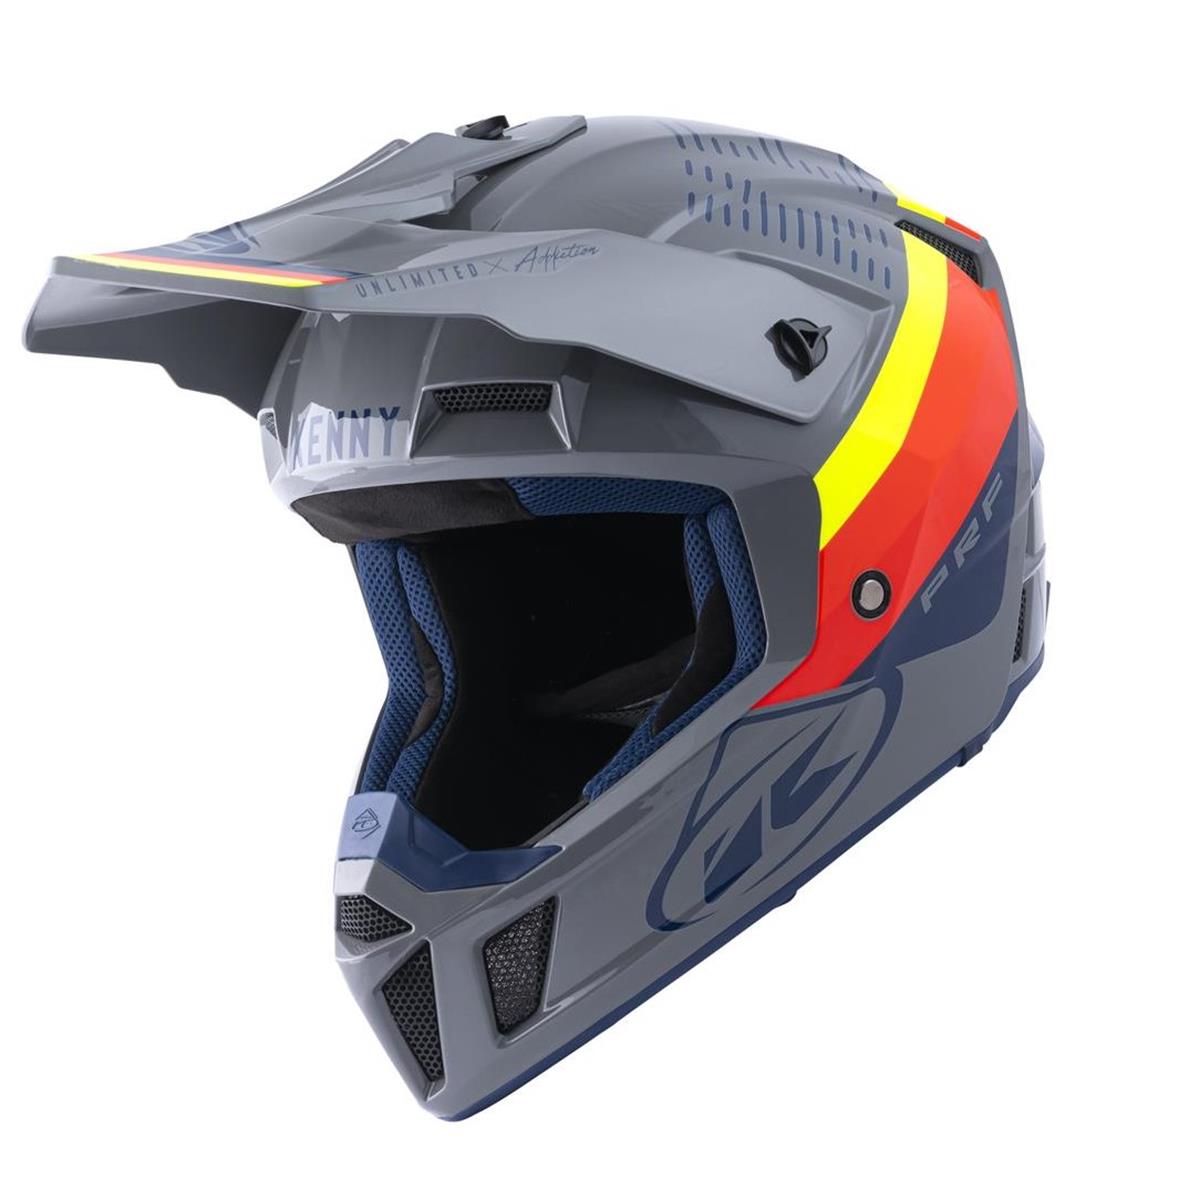 Kenny Motocross-Helm Performance Graphic - Grau